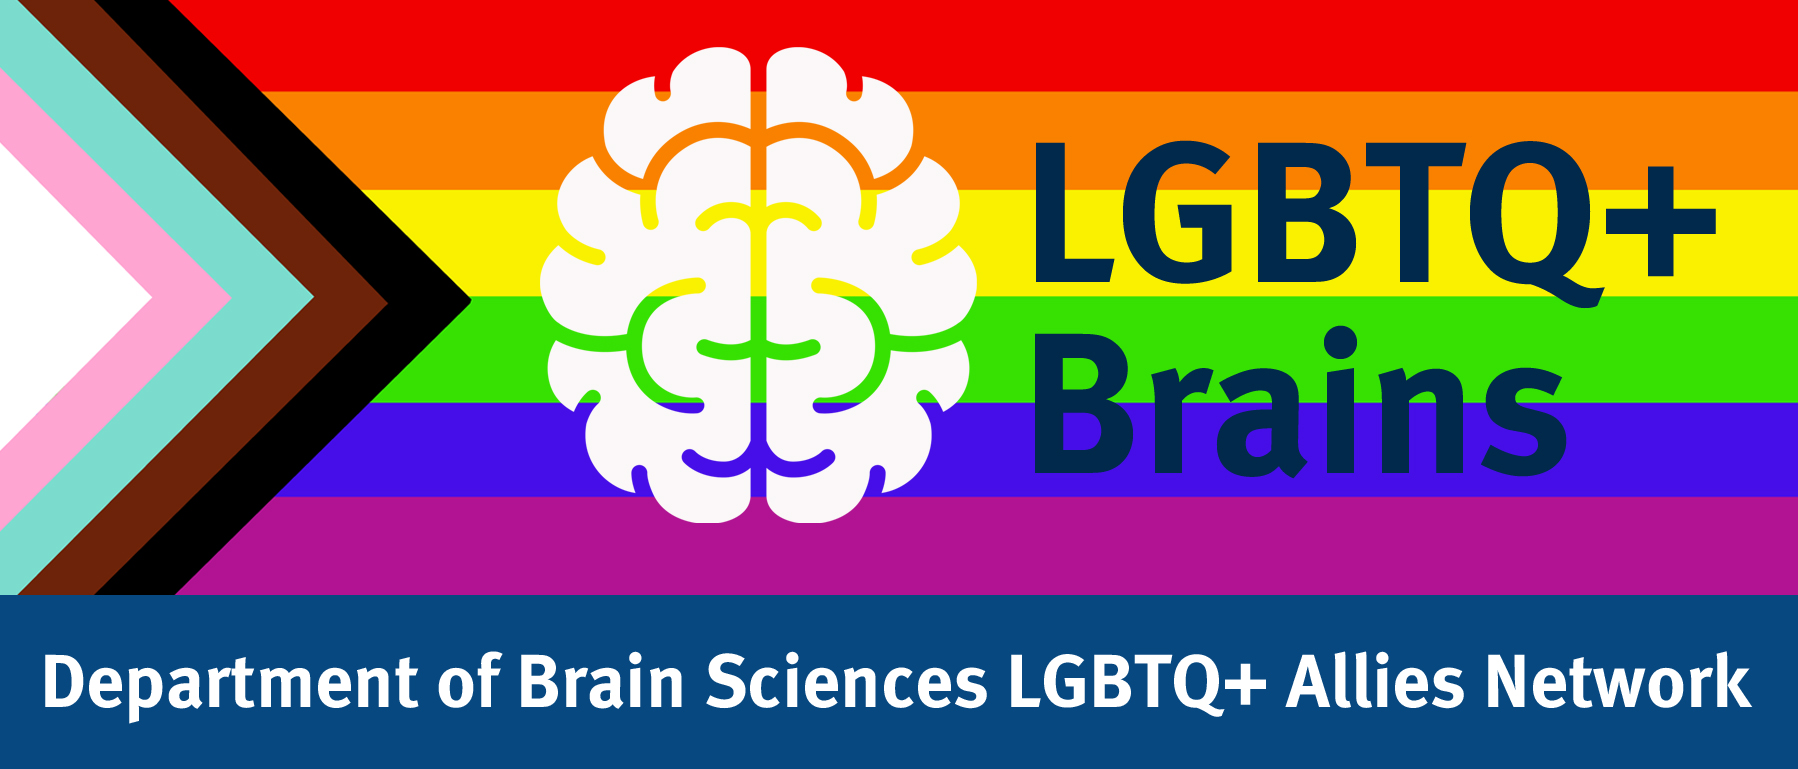 LGBTQ+ blog banner2